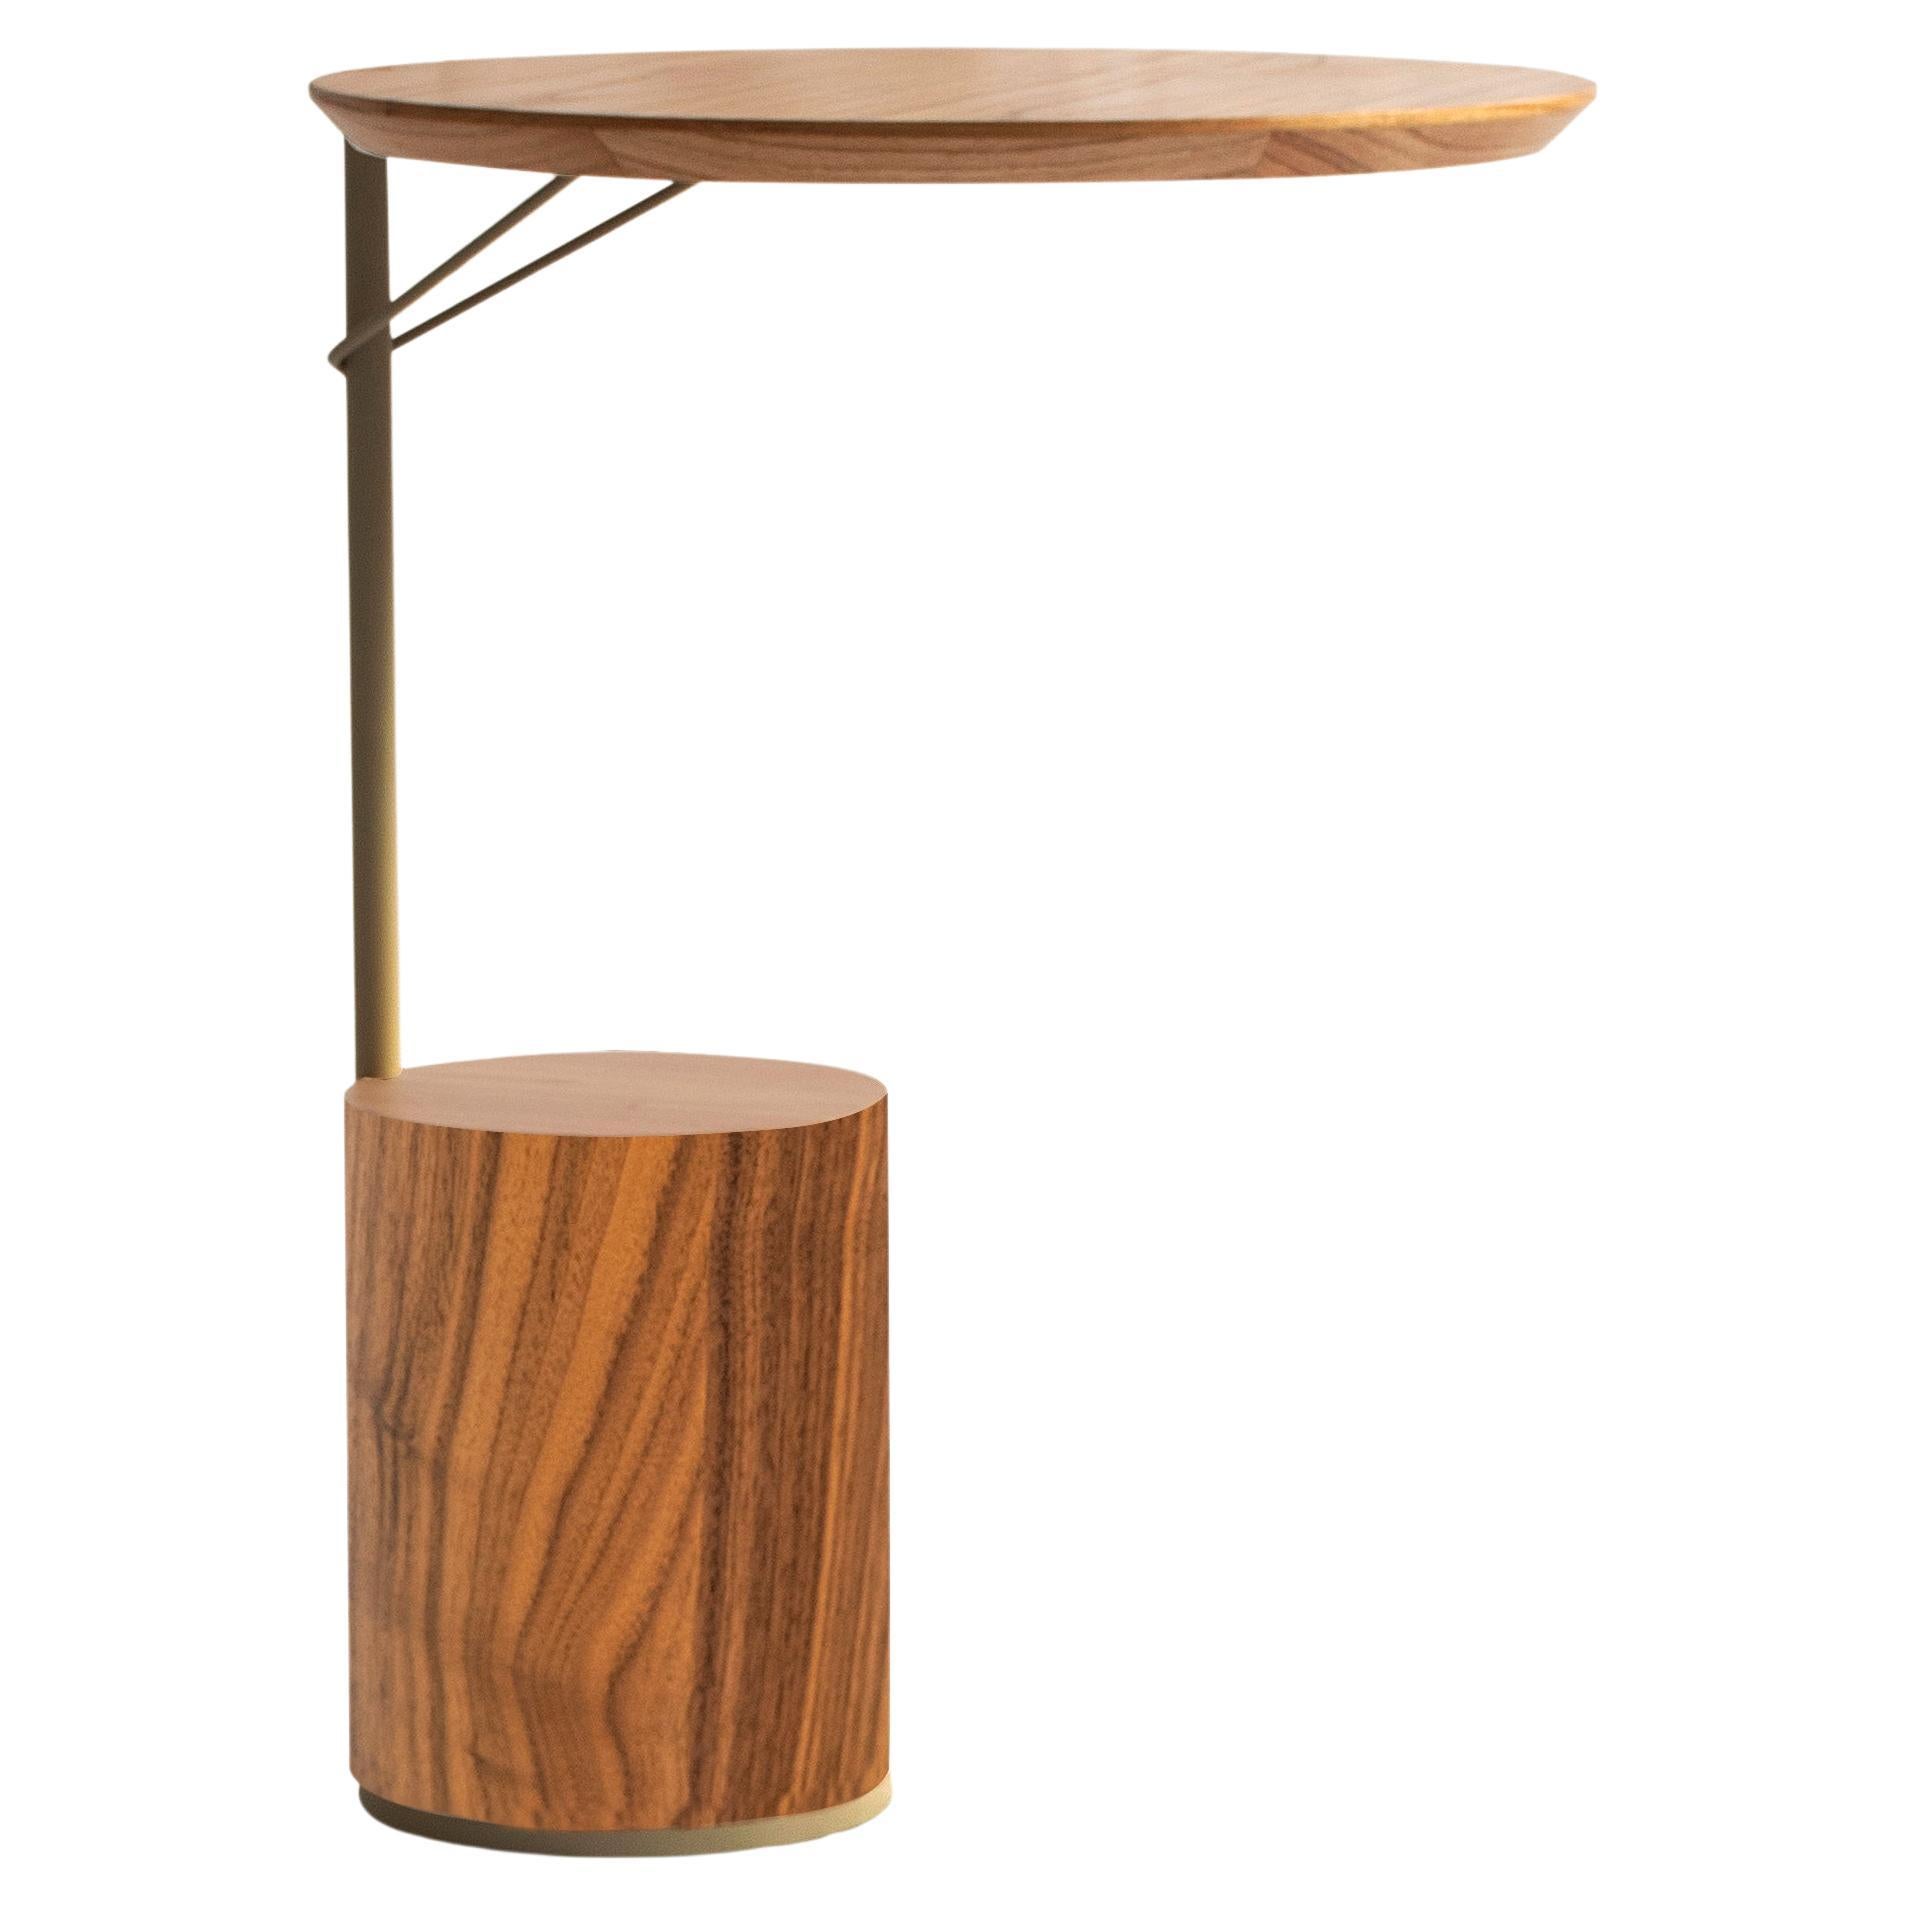 "Tyr" Side Table in Walnut Natural Wood Veneer and Carbon Steel Details